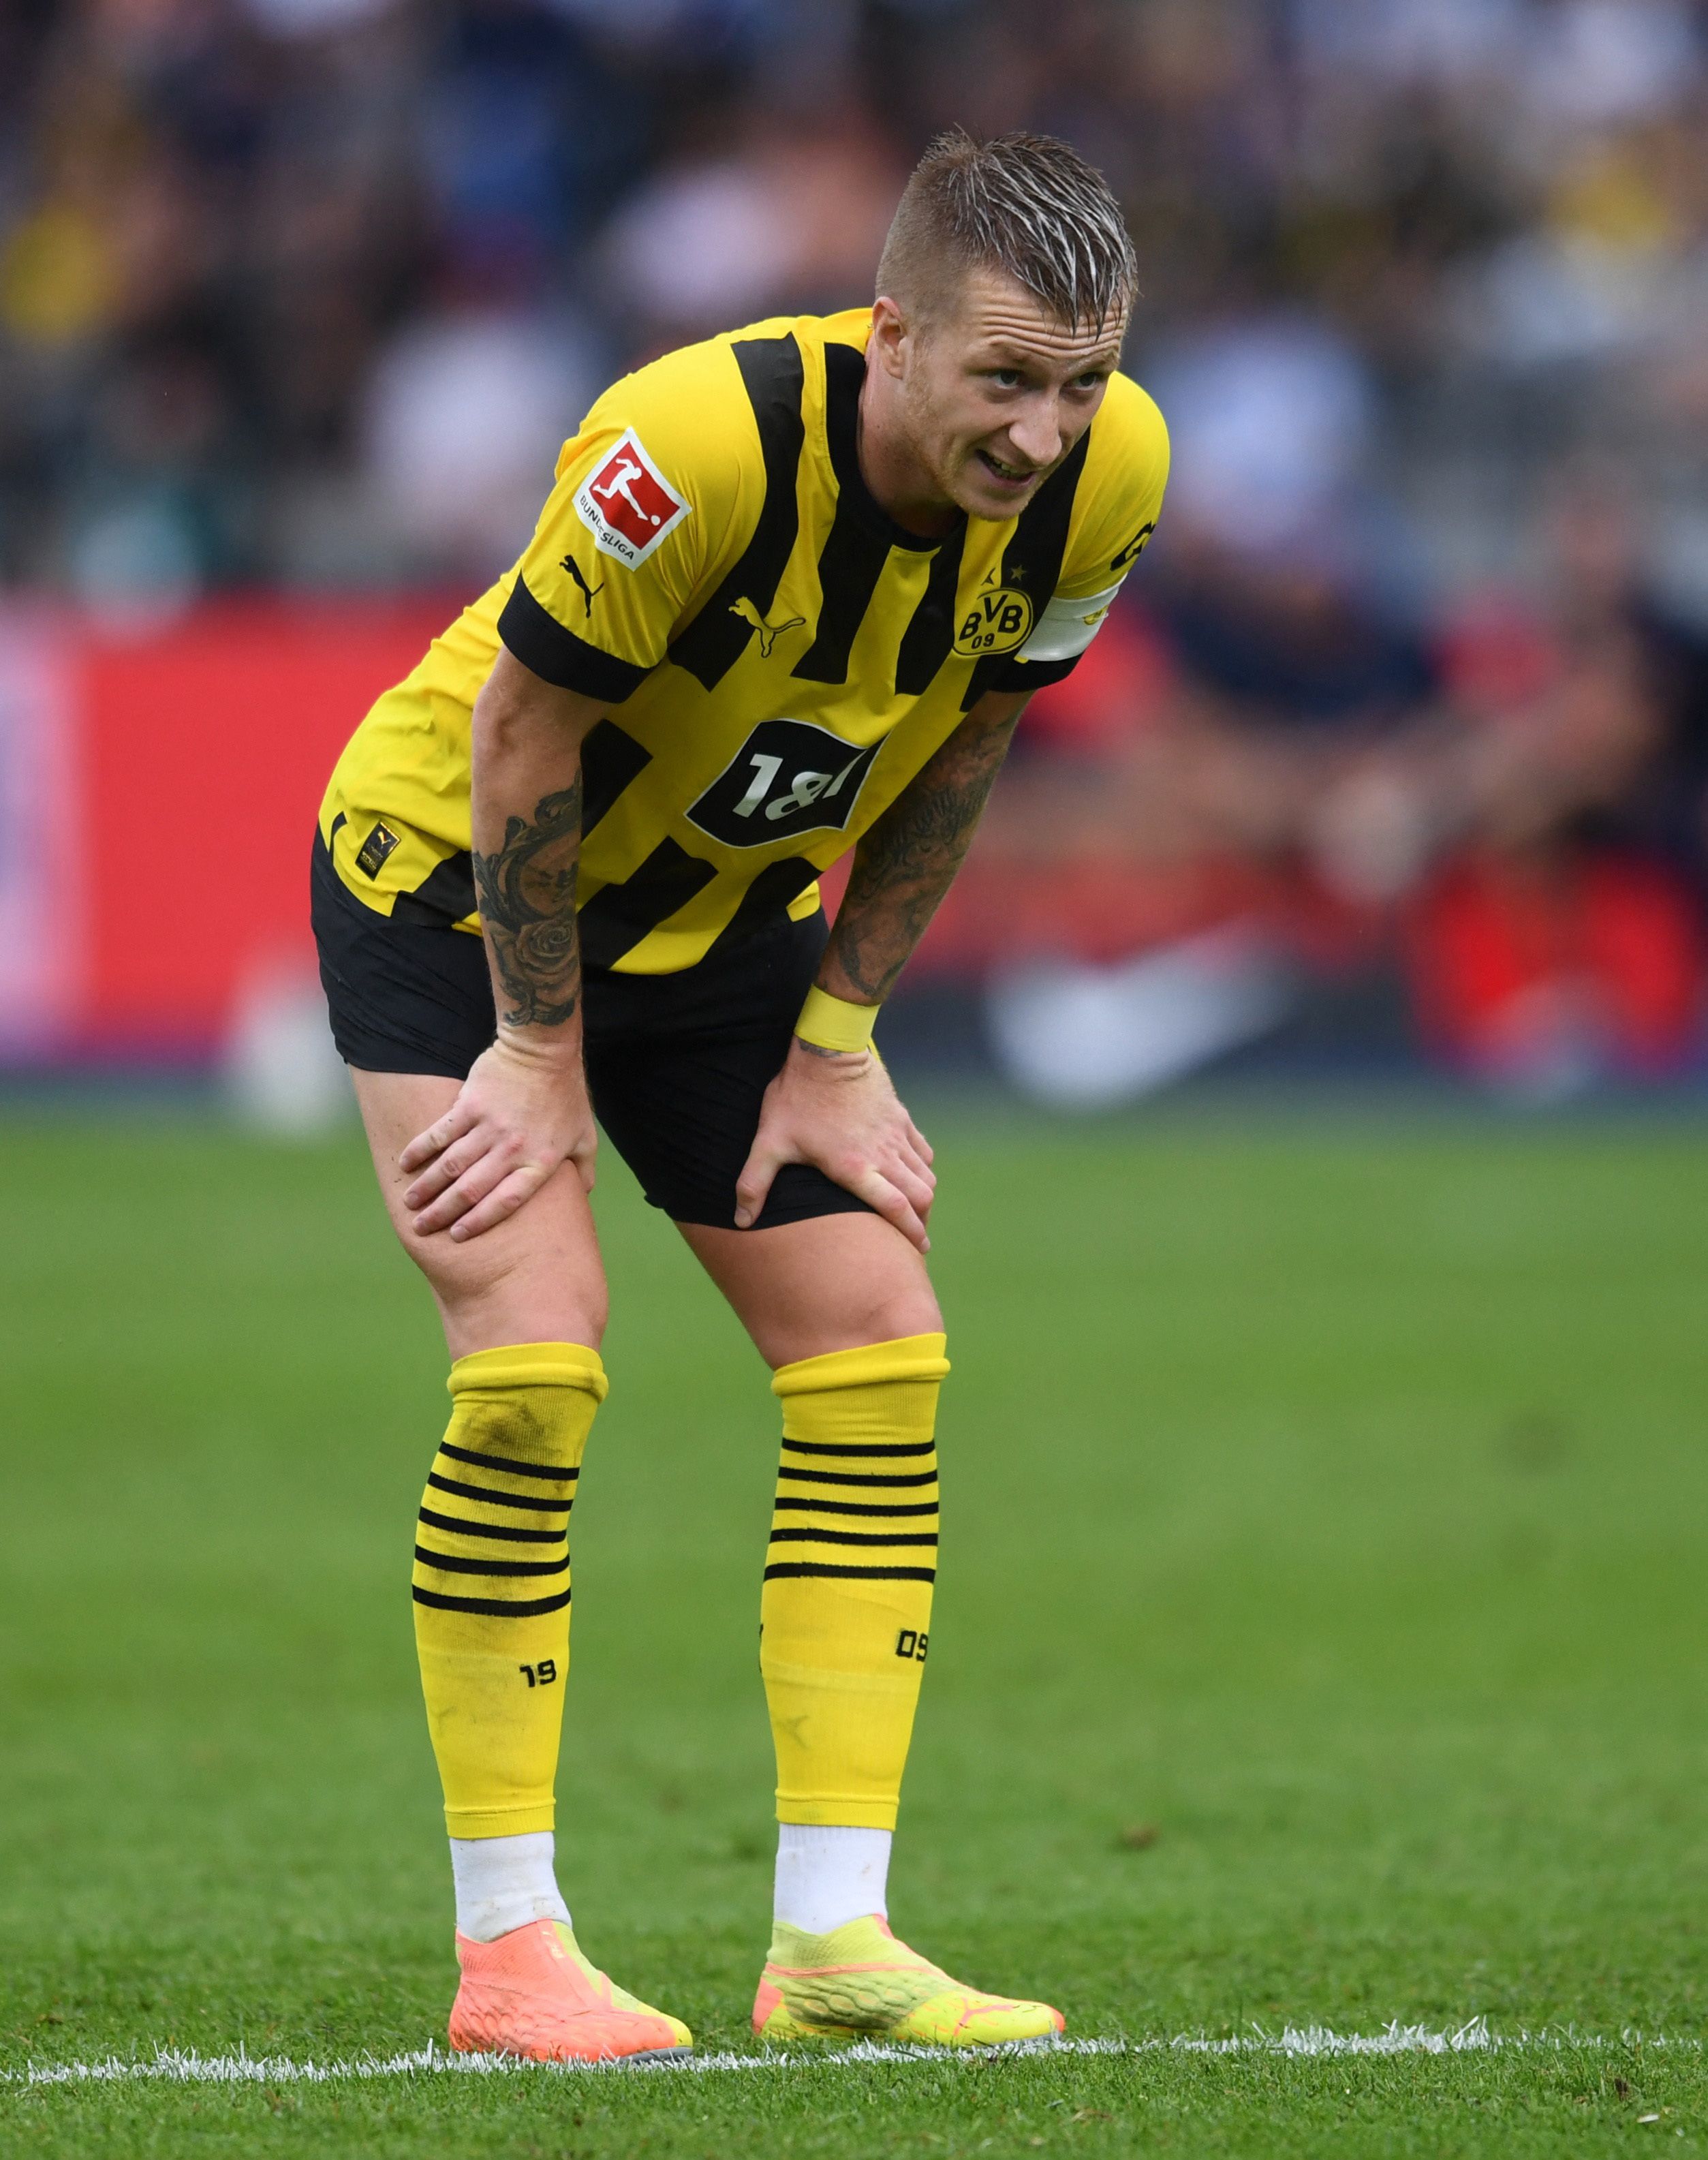 Dortmund's Reus this season.